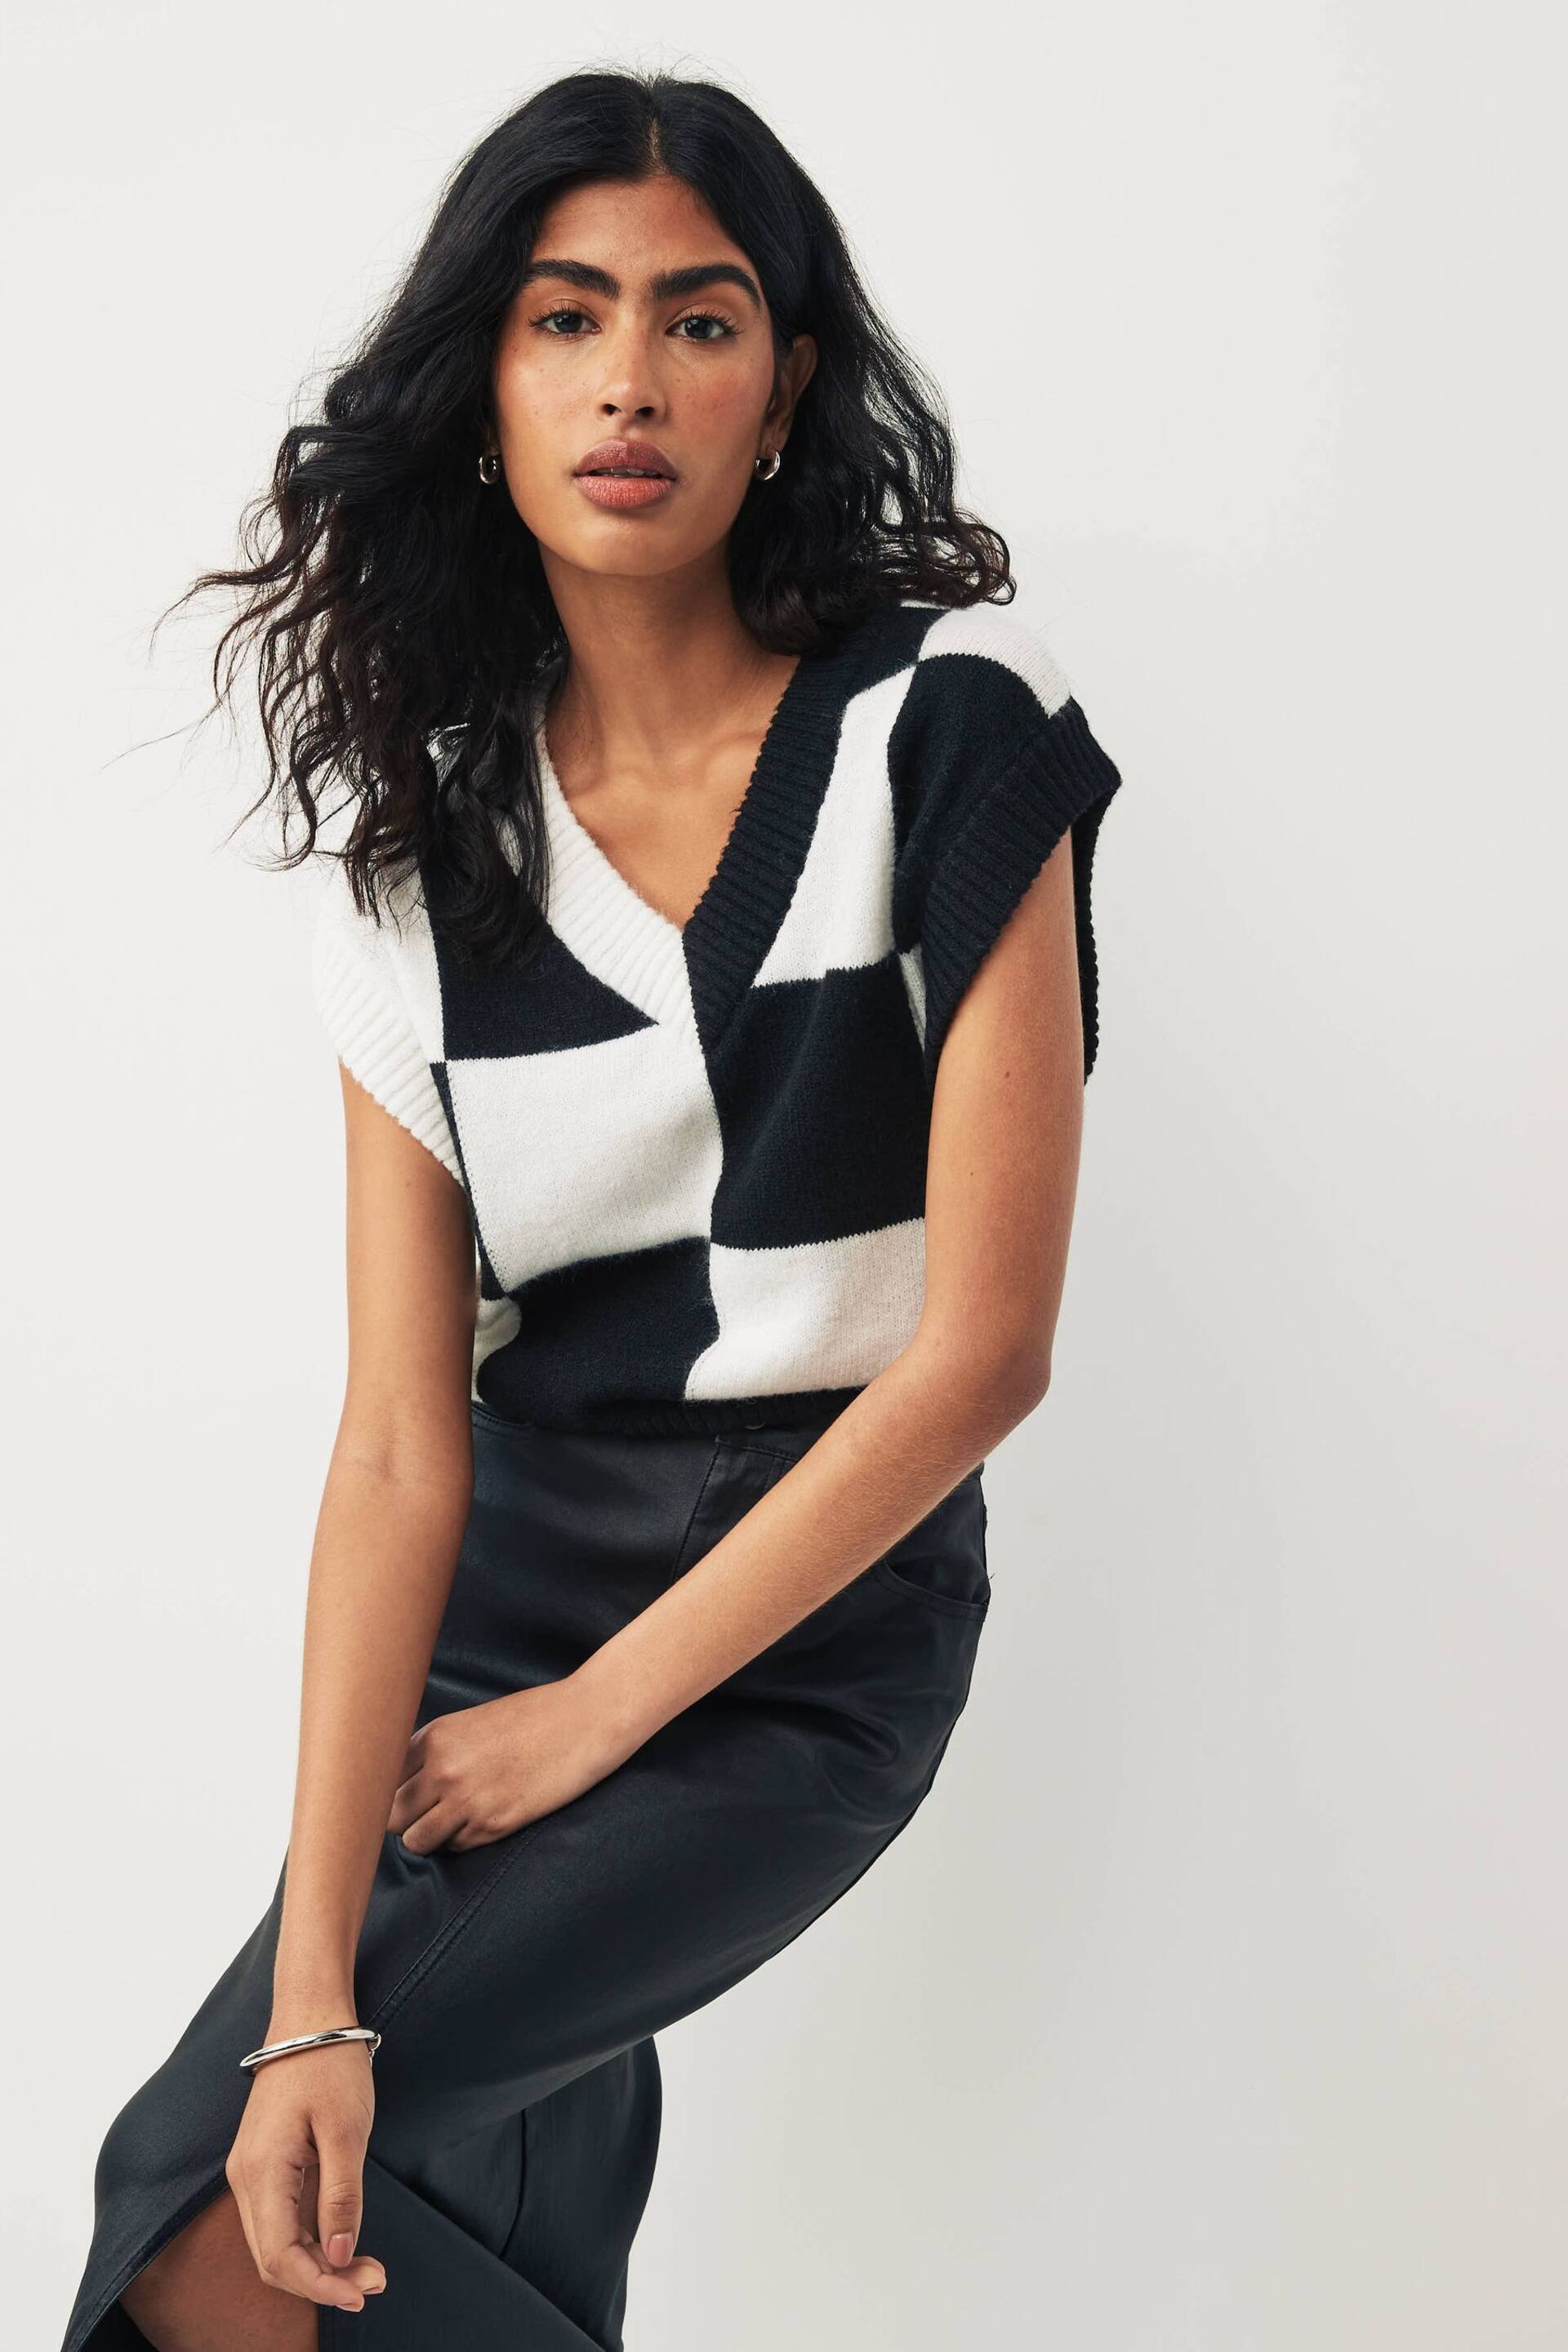 VERO MODA Black Checkerboard Print Sleeveless Knitted Vest - Image 3 of 4